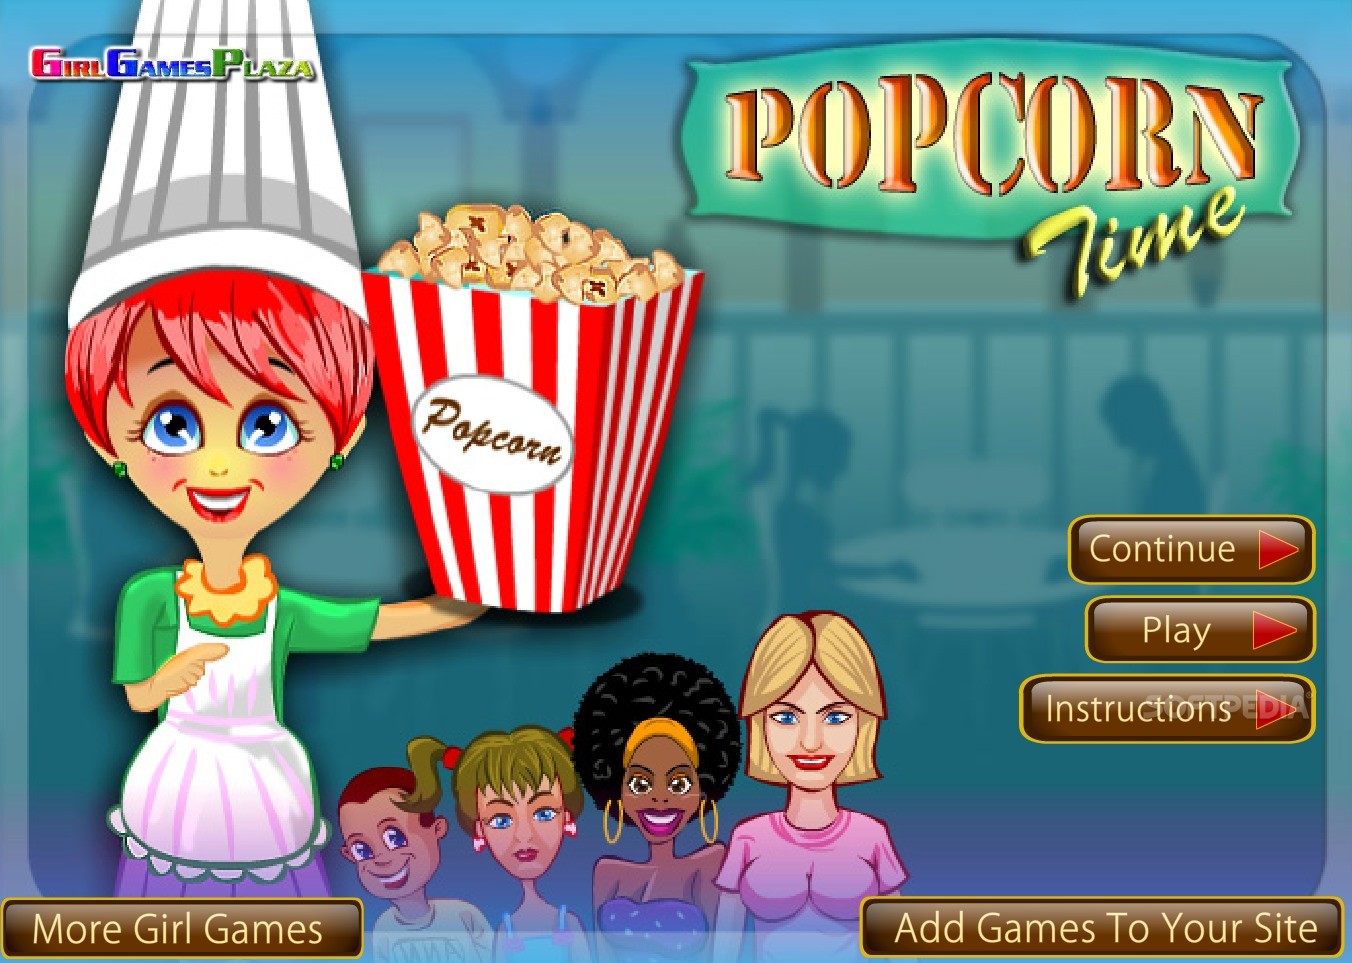 popcorn time download mac 2021